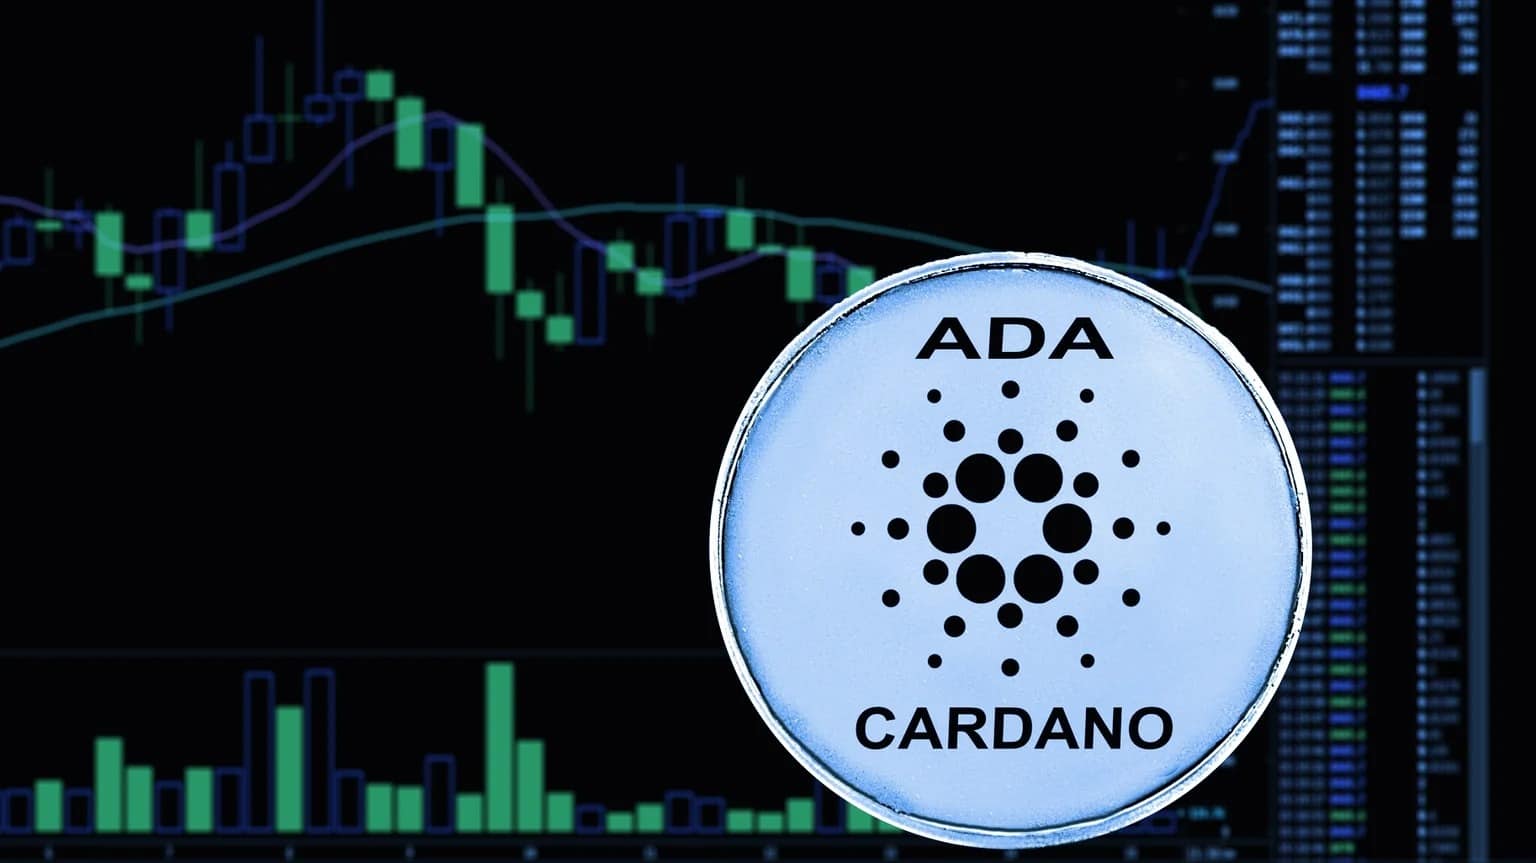 Kuidas erineb Cardano Bitcoinist?